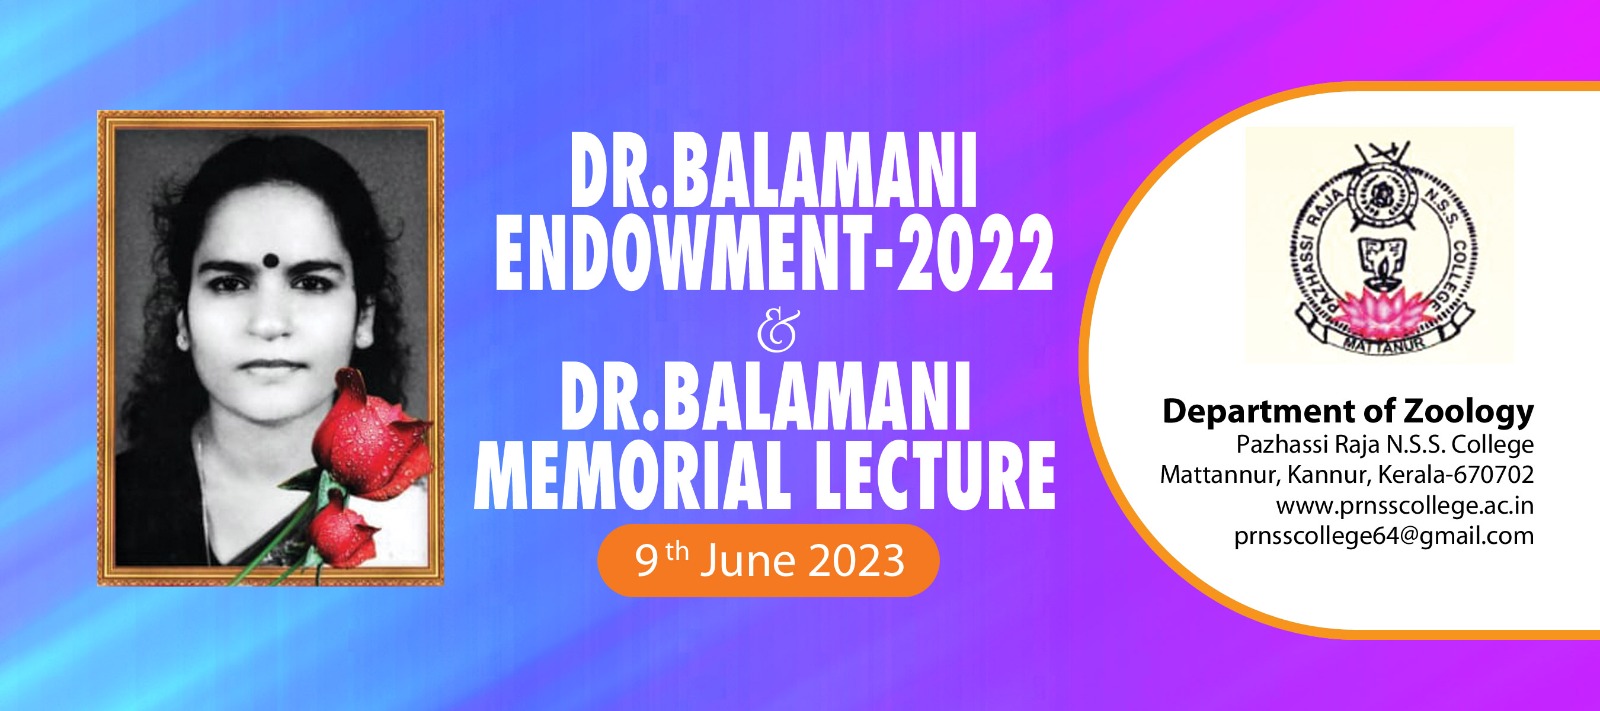 Dr. Balamani Endowment 2022